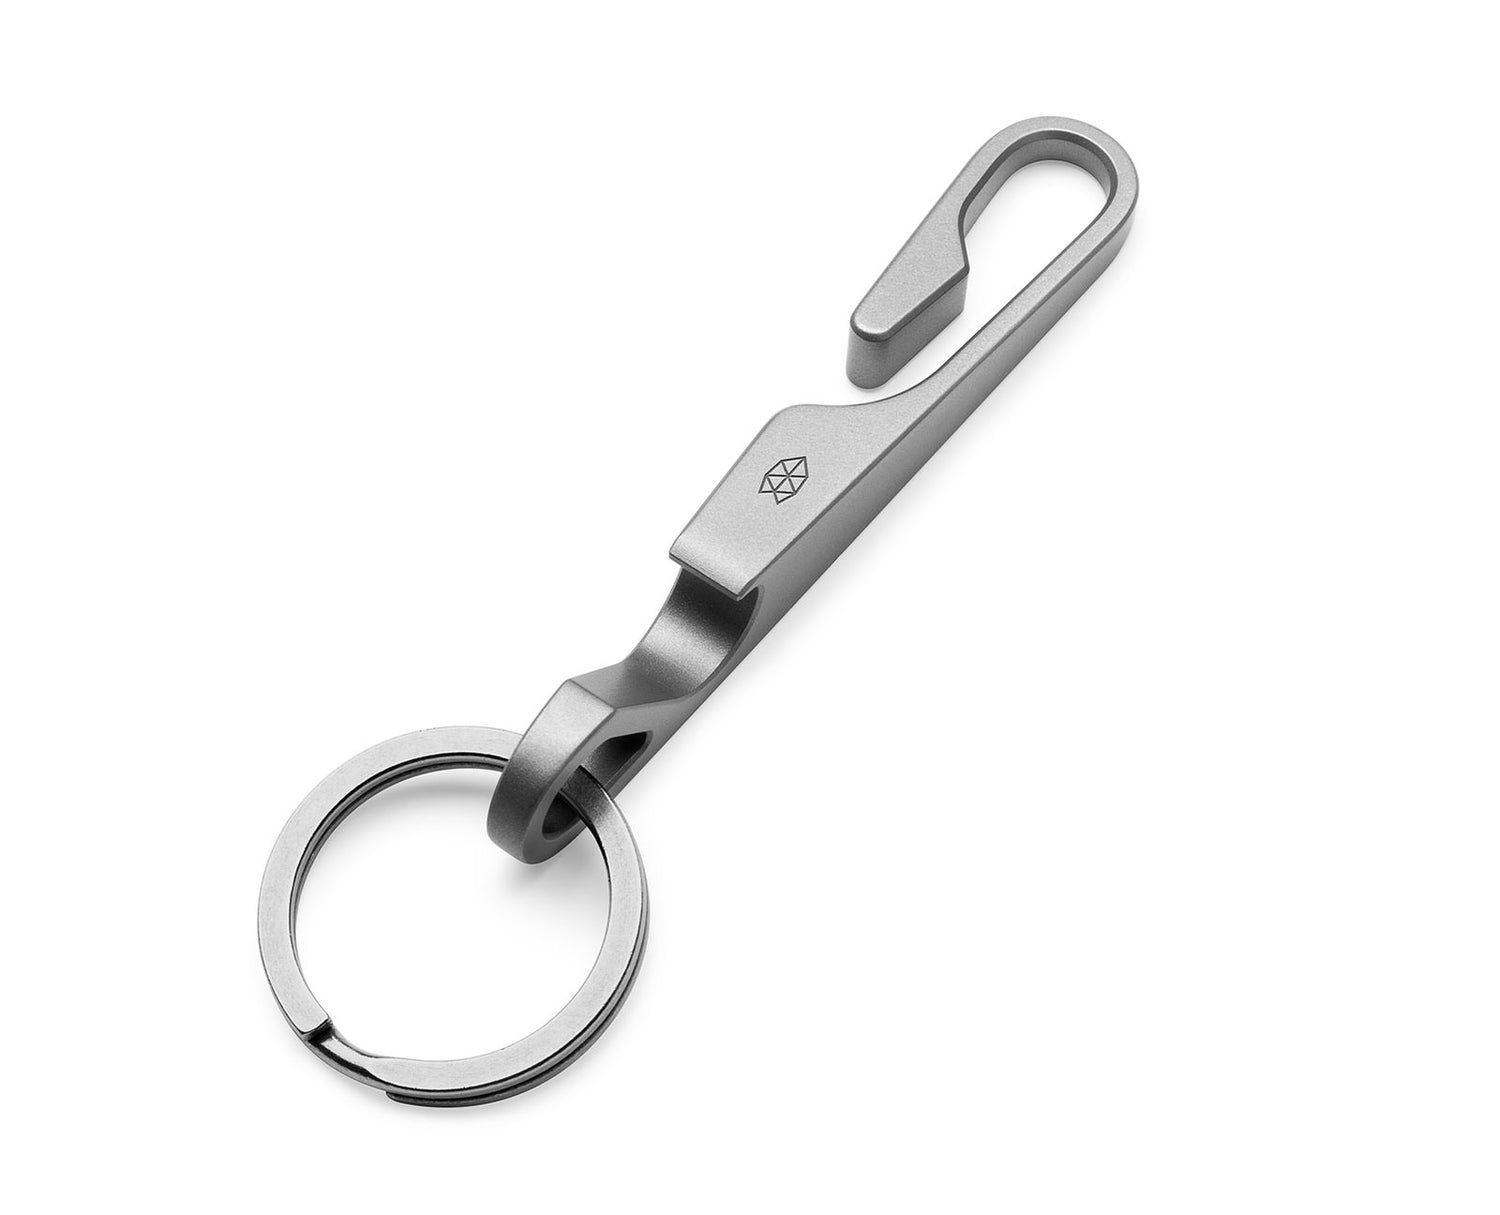 The Midland titanium EDC key ring.